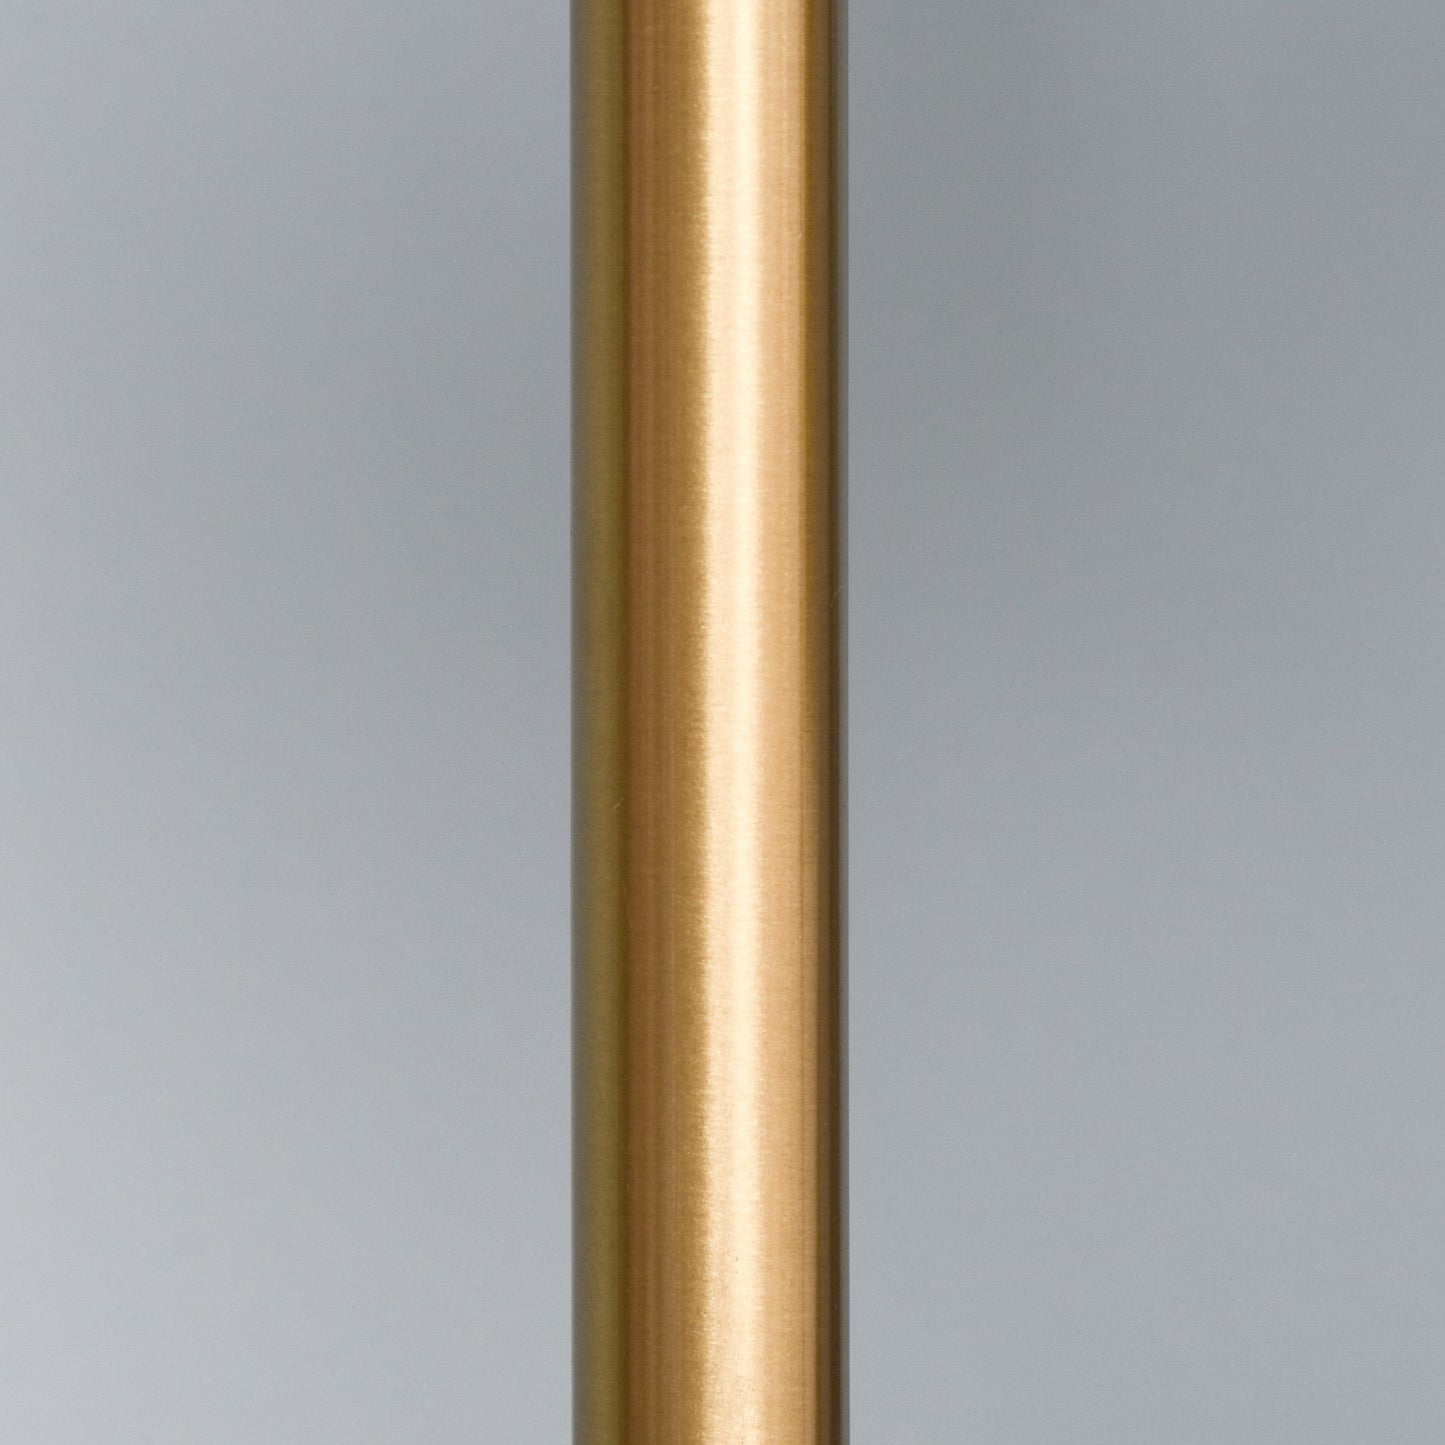 Nancy's Springville Vloerlamp - Staal/Linnen - Klassiek - Goud - 47 x 37 x 153 cm